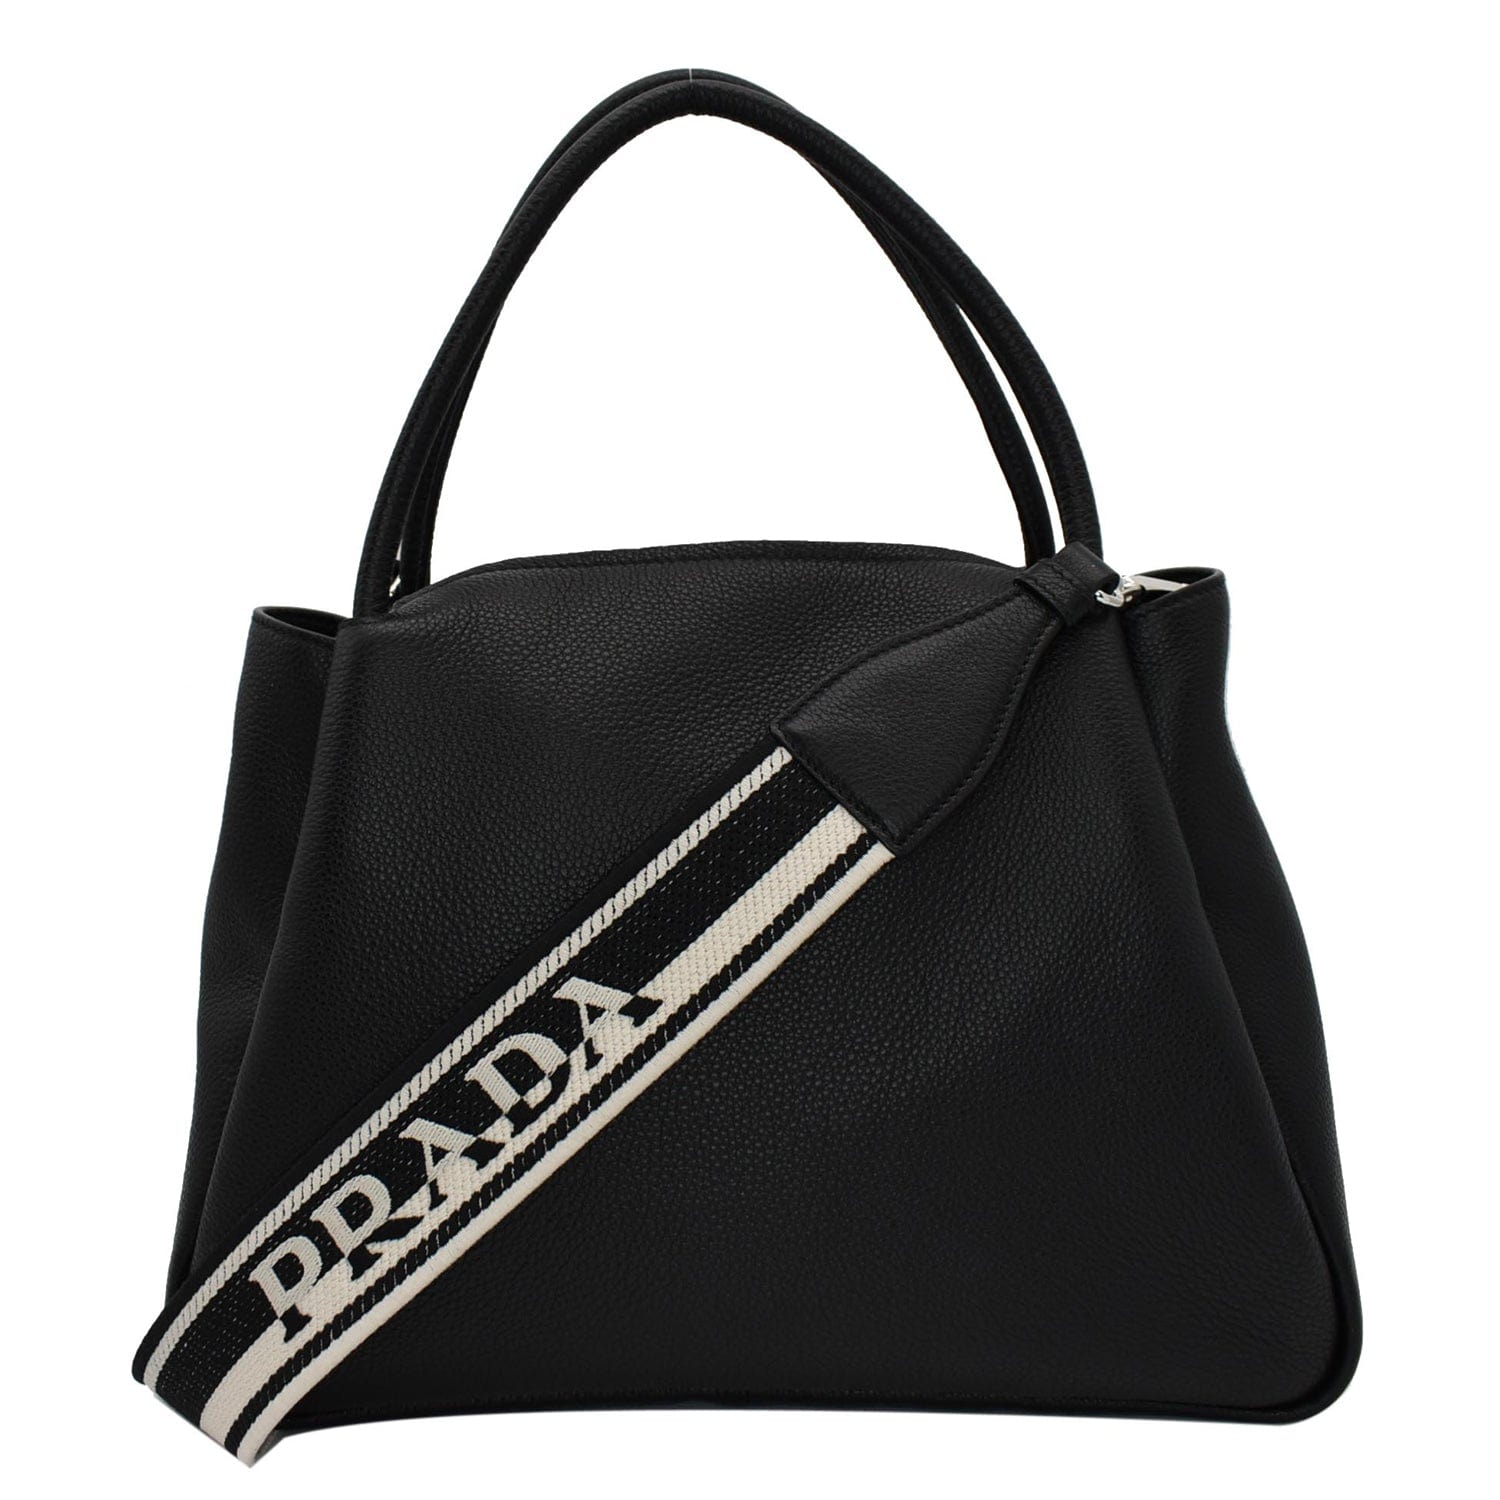 Prada Small Leather Bucket Bag - Black